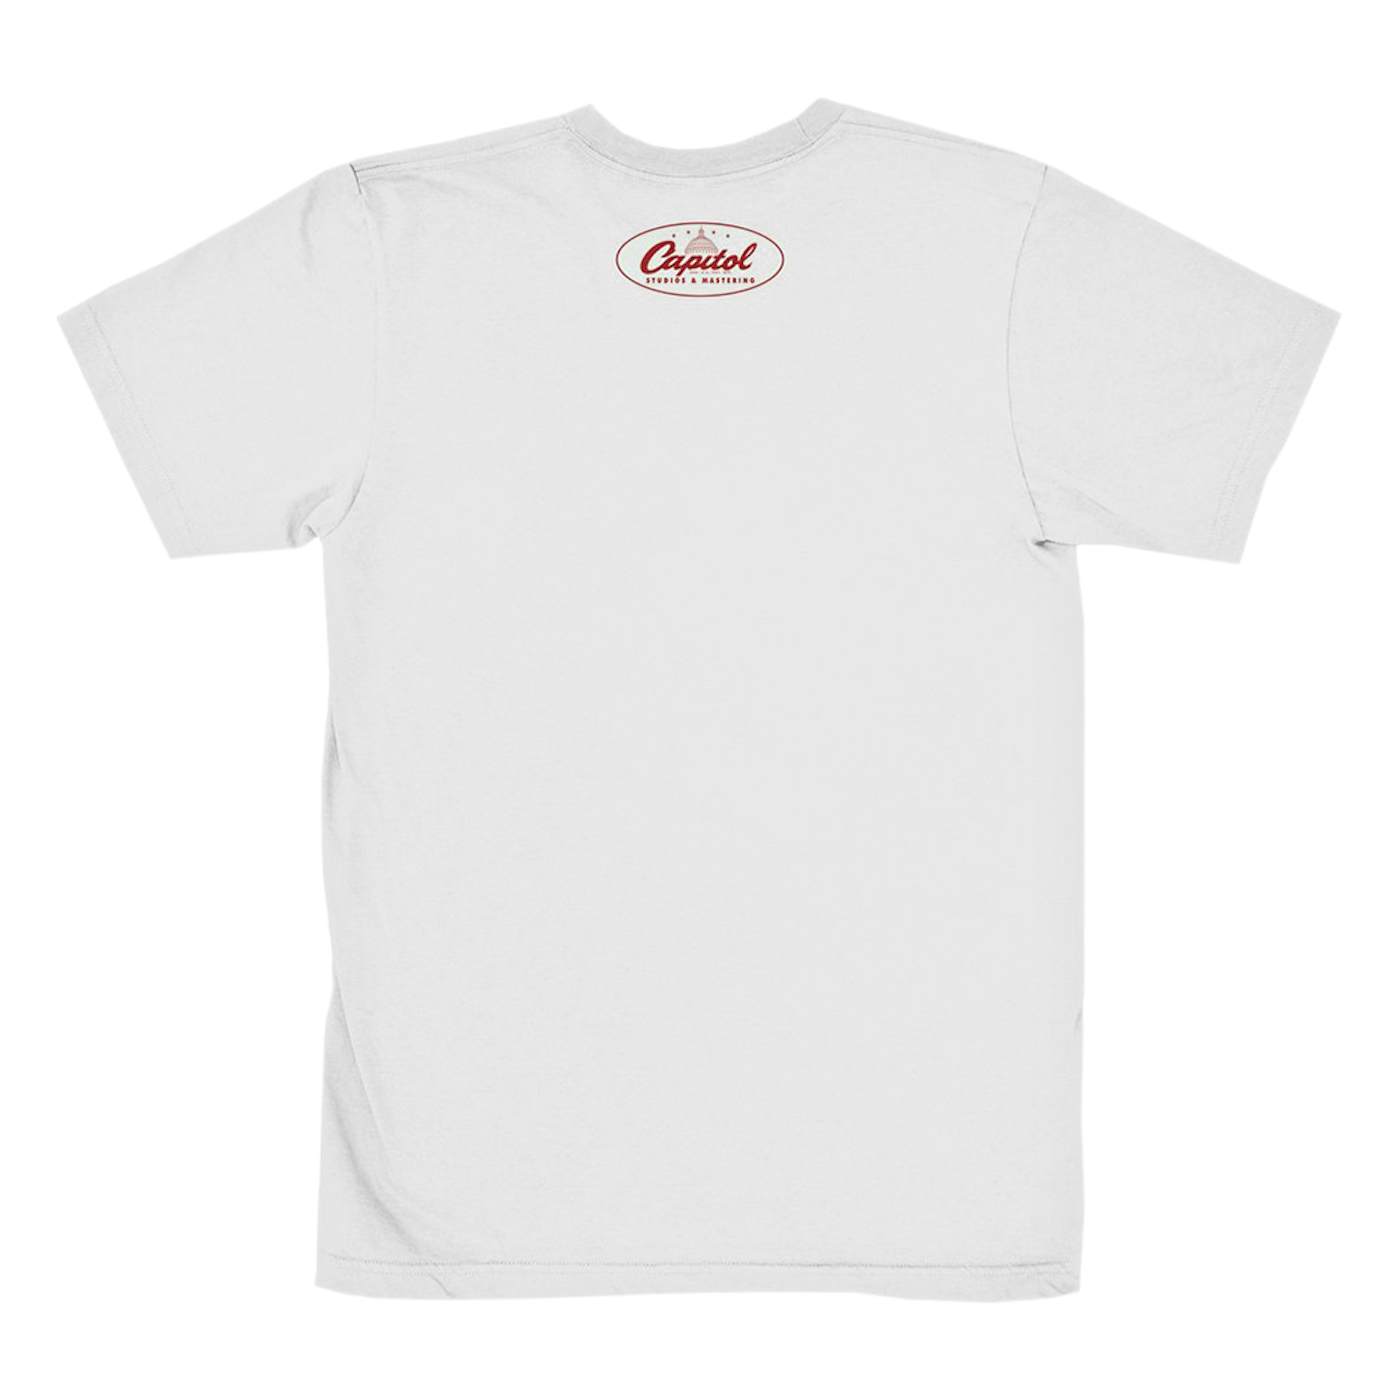 Capitol Records Capitol Studios Quiet Recording T-Shirt White